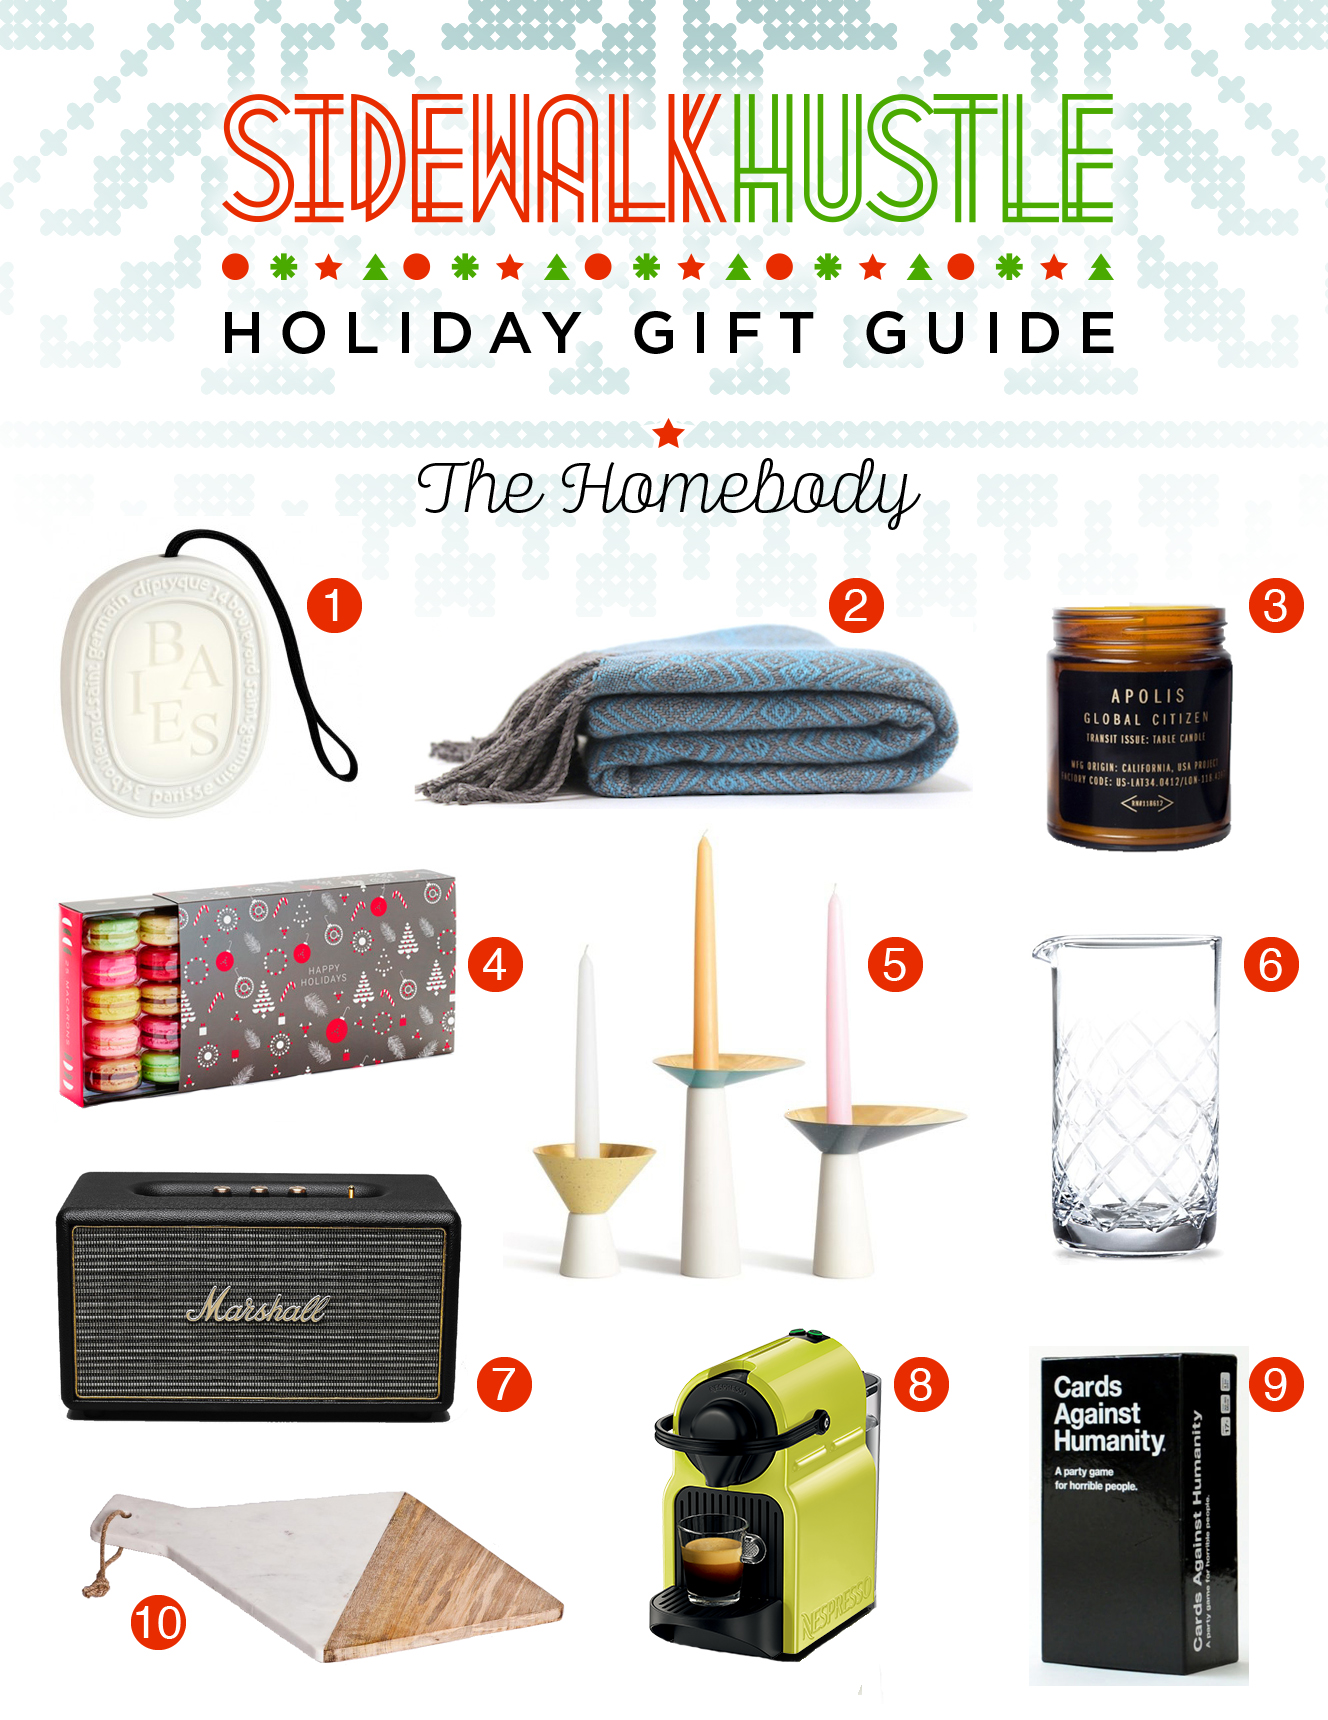 Sidewalk Hustle Holiday Gift Guide 2014 - The Homebody